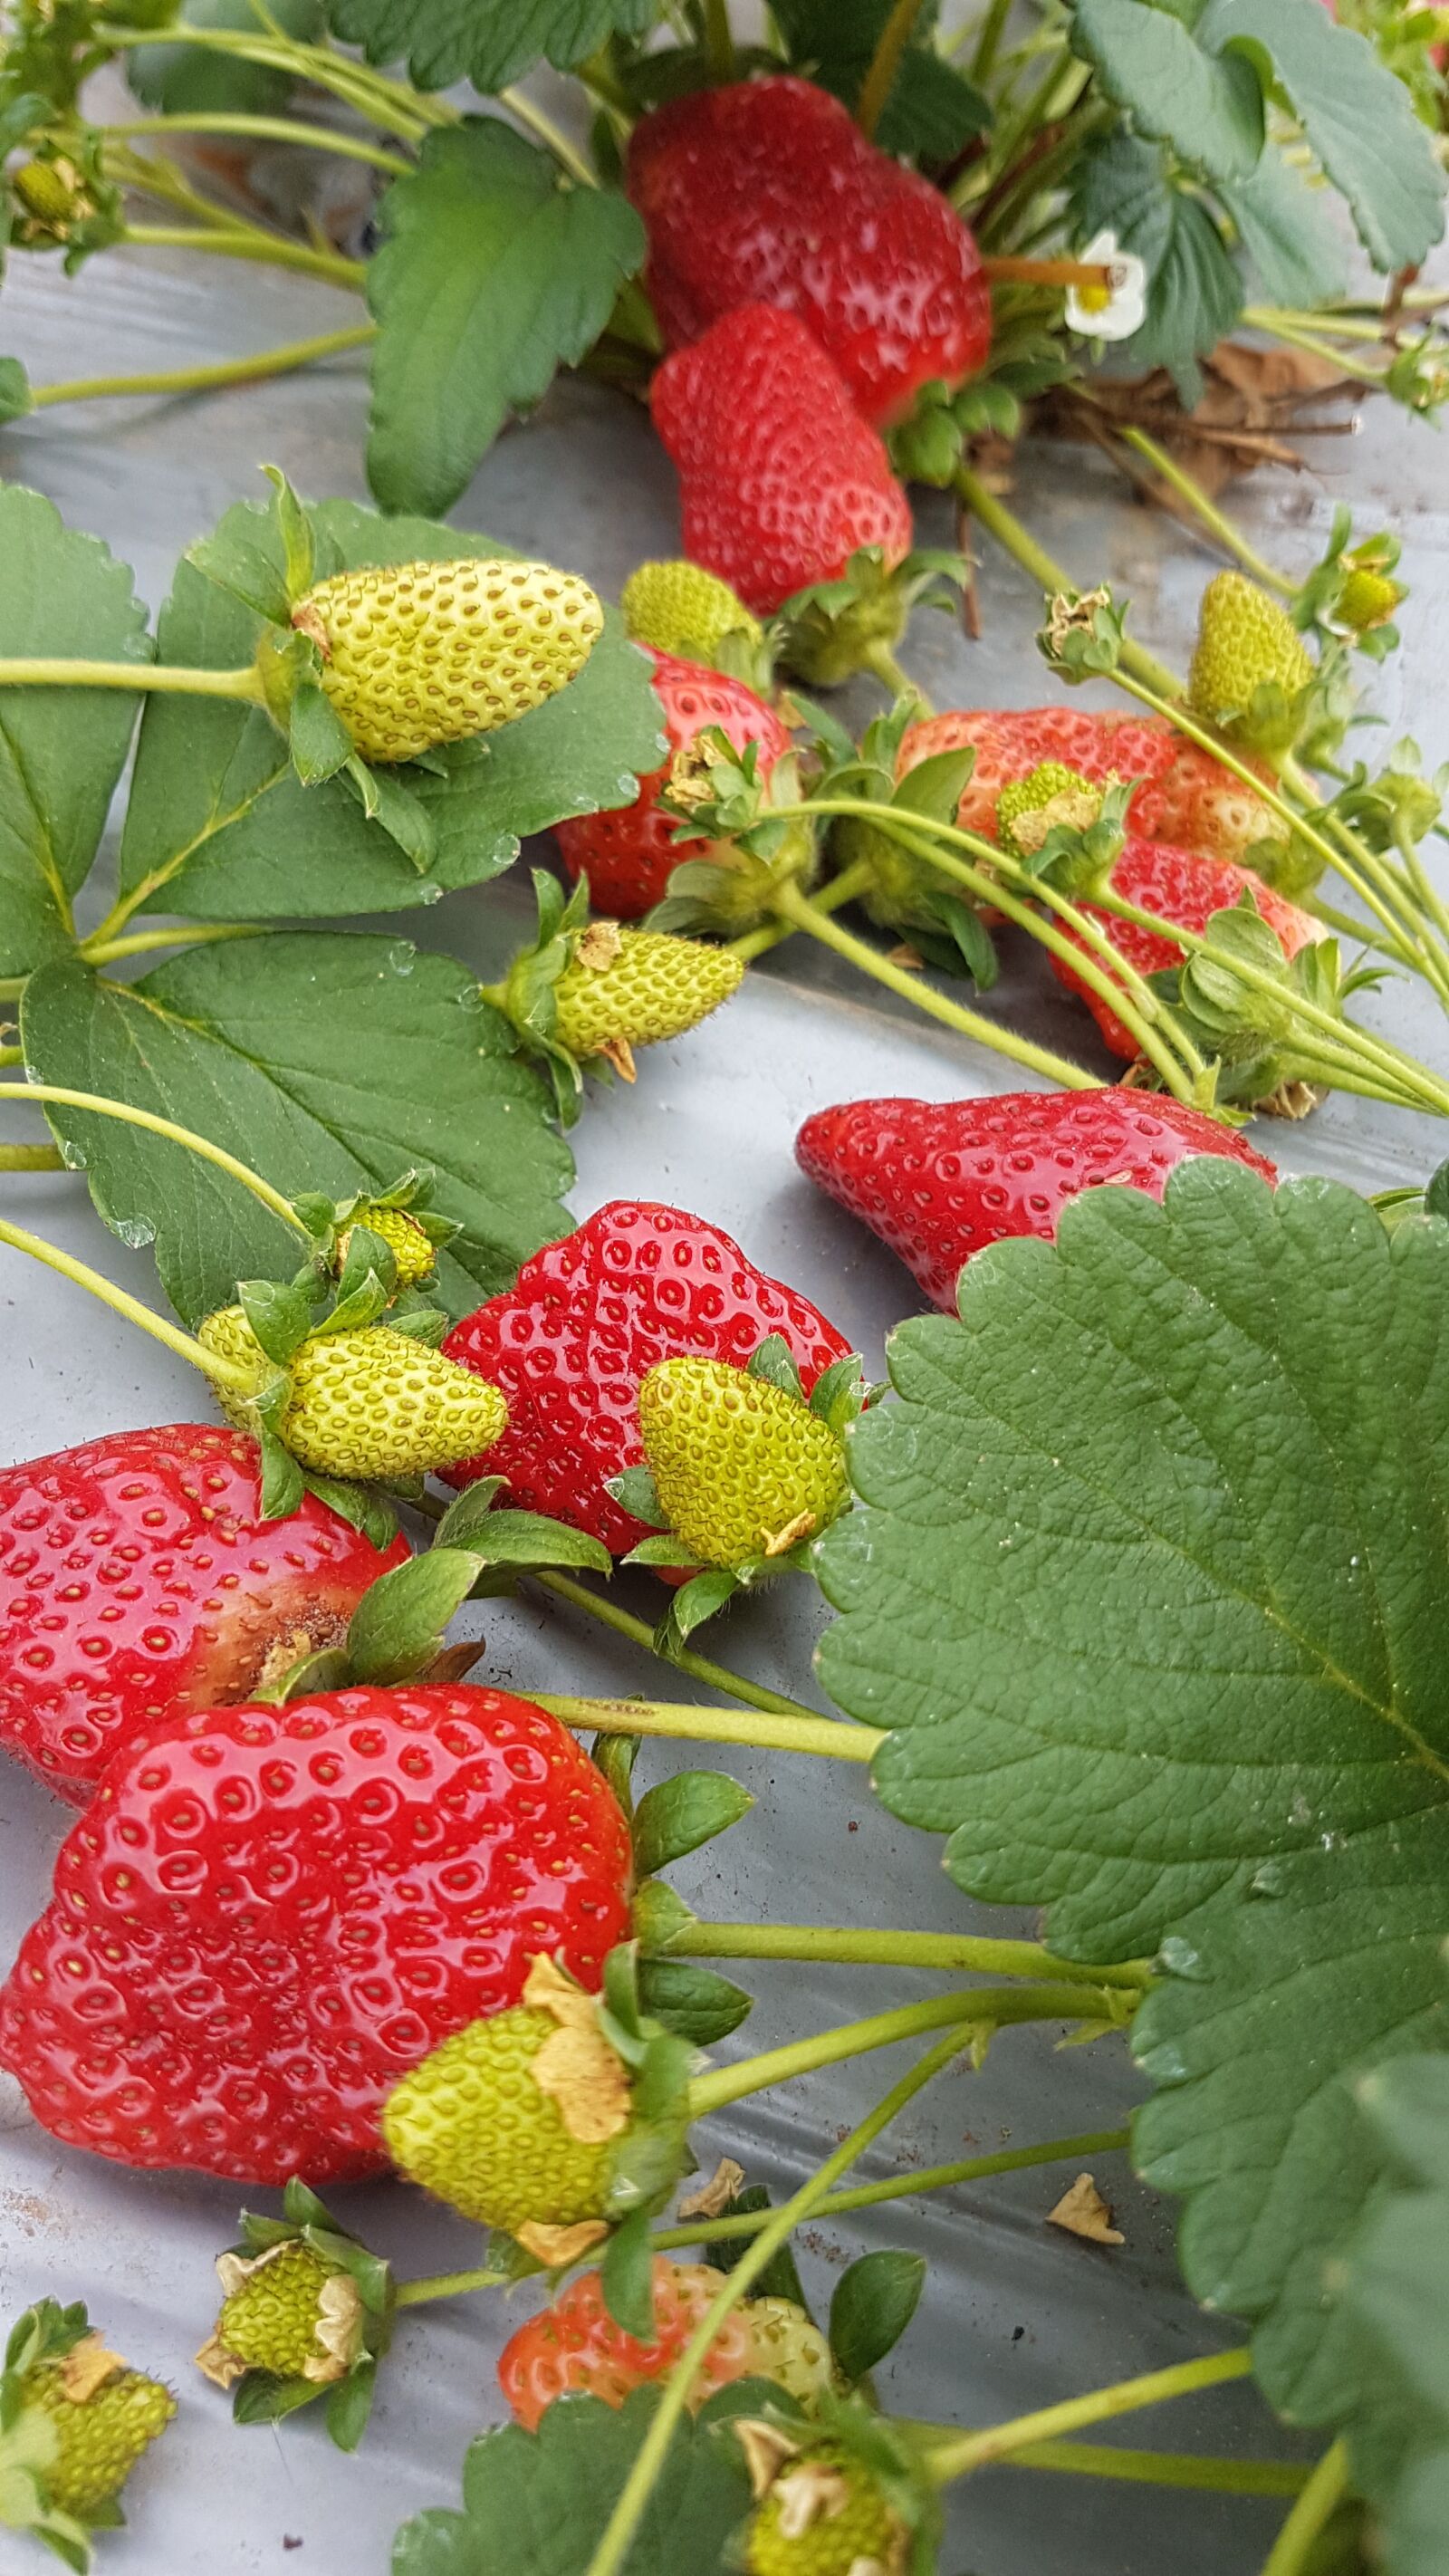 Samsung Galaxy S7 sample photo. Strawberries, food, nature photography